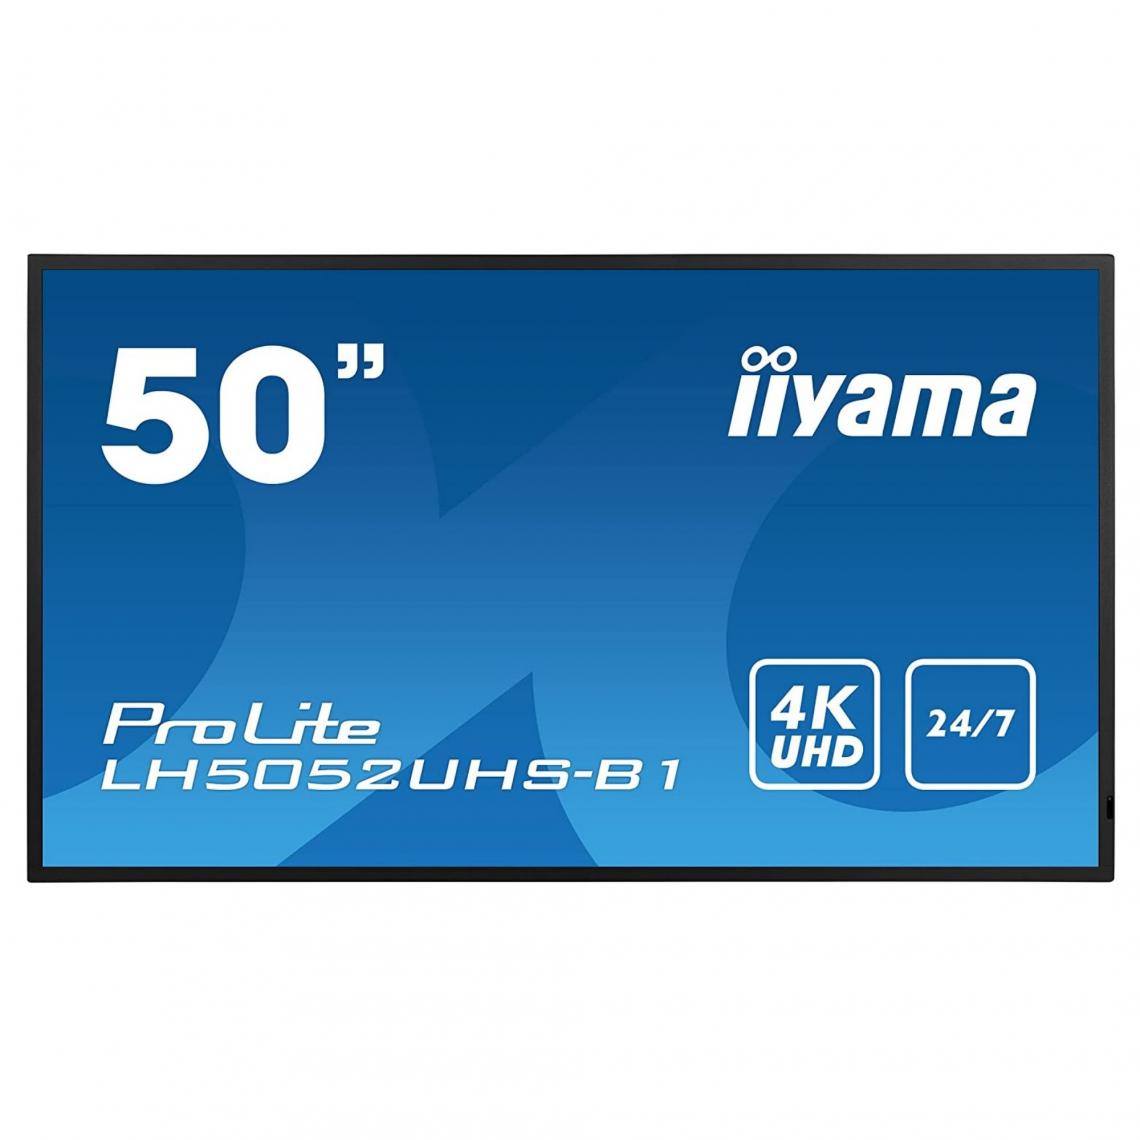 Iiyama - IIYAMA LFD 50" dalle VA 24/7 3840x2160 DVI VGA 3xHDMI 2xHaut-parleurs DisplayPort 2xUSB 500cd/m² Paysage/port 8ms MediaPlayer VESA 400x400 LH5052UHS-B1 - Moniteur PC